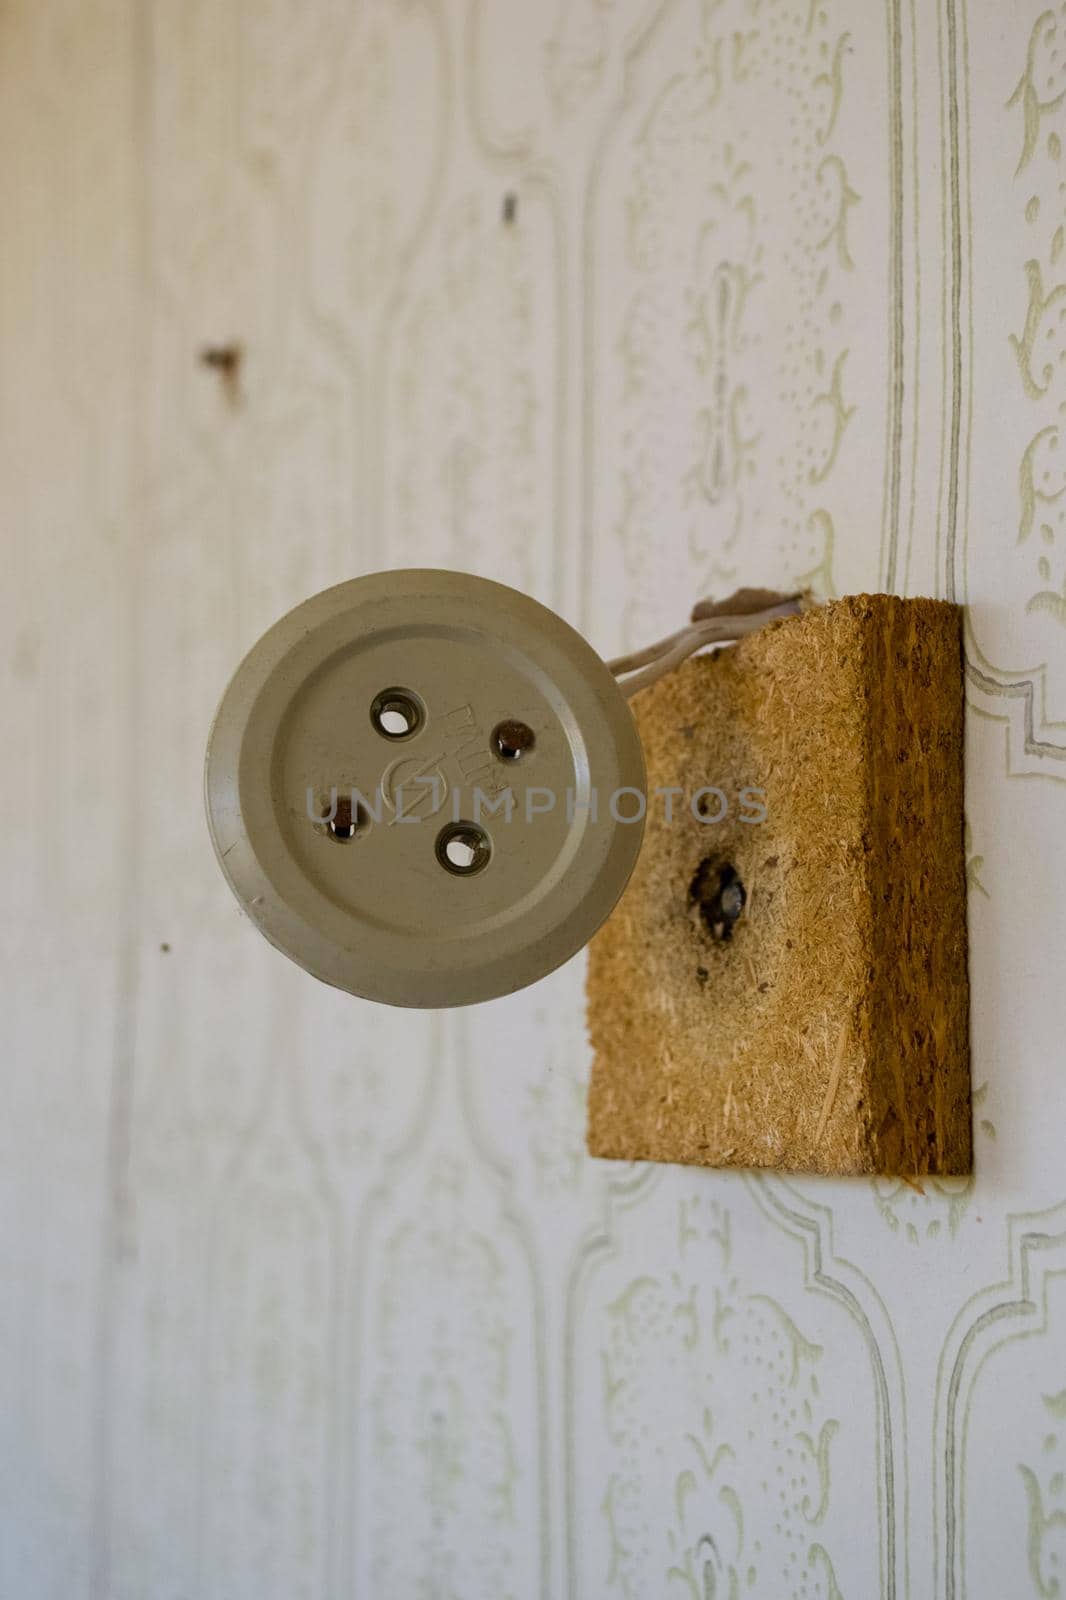 Broken radio socket. Soviet appliances in the old house.